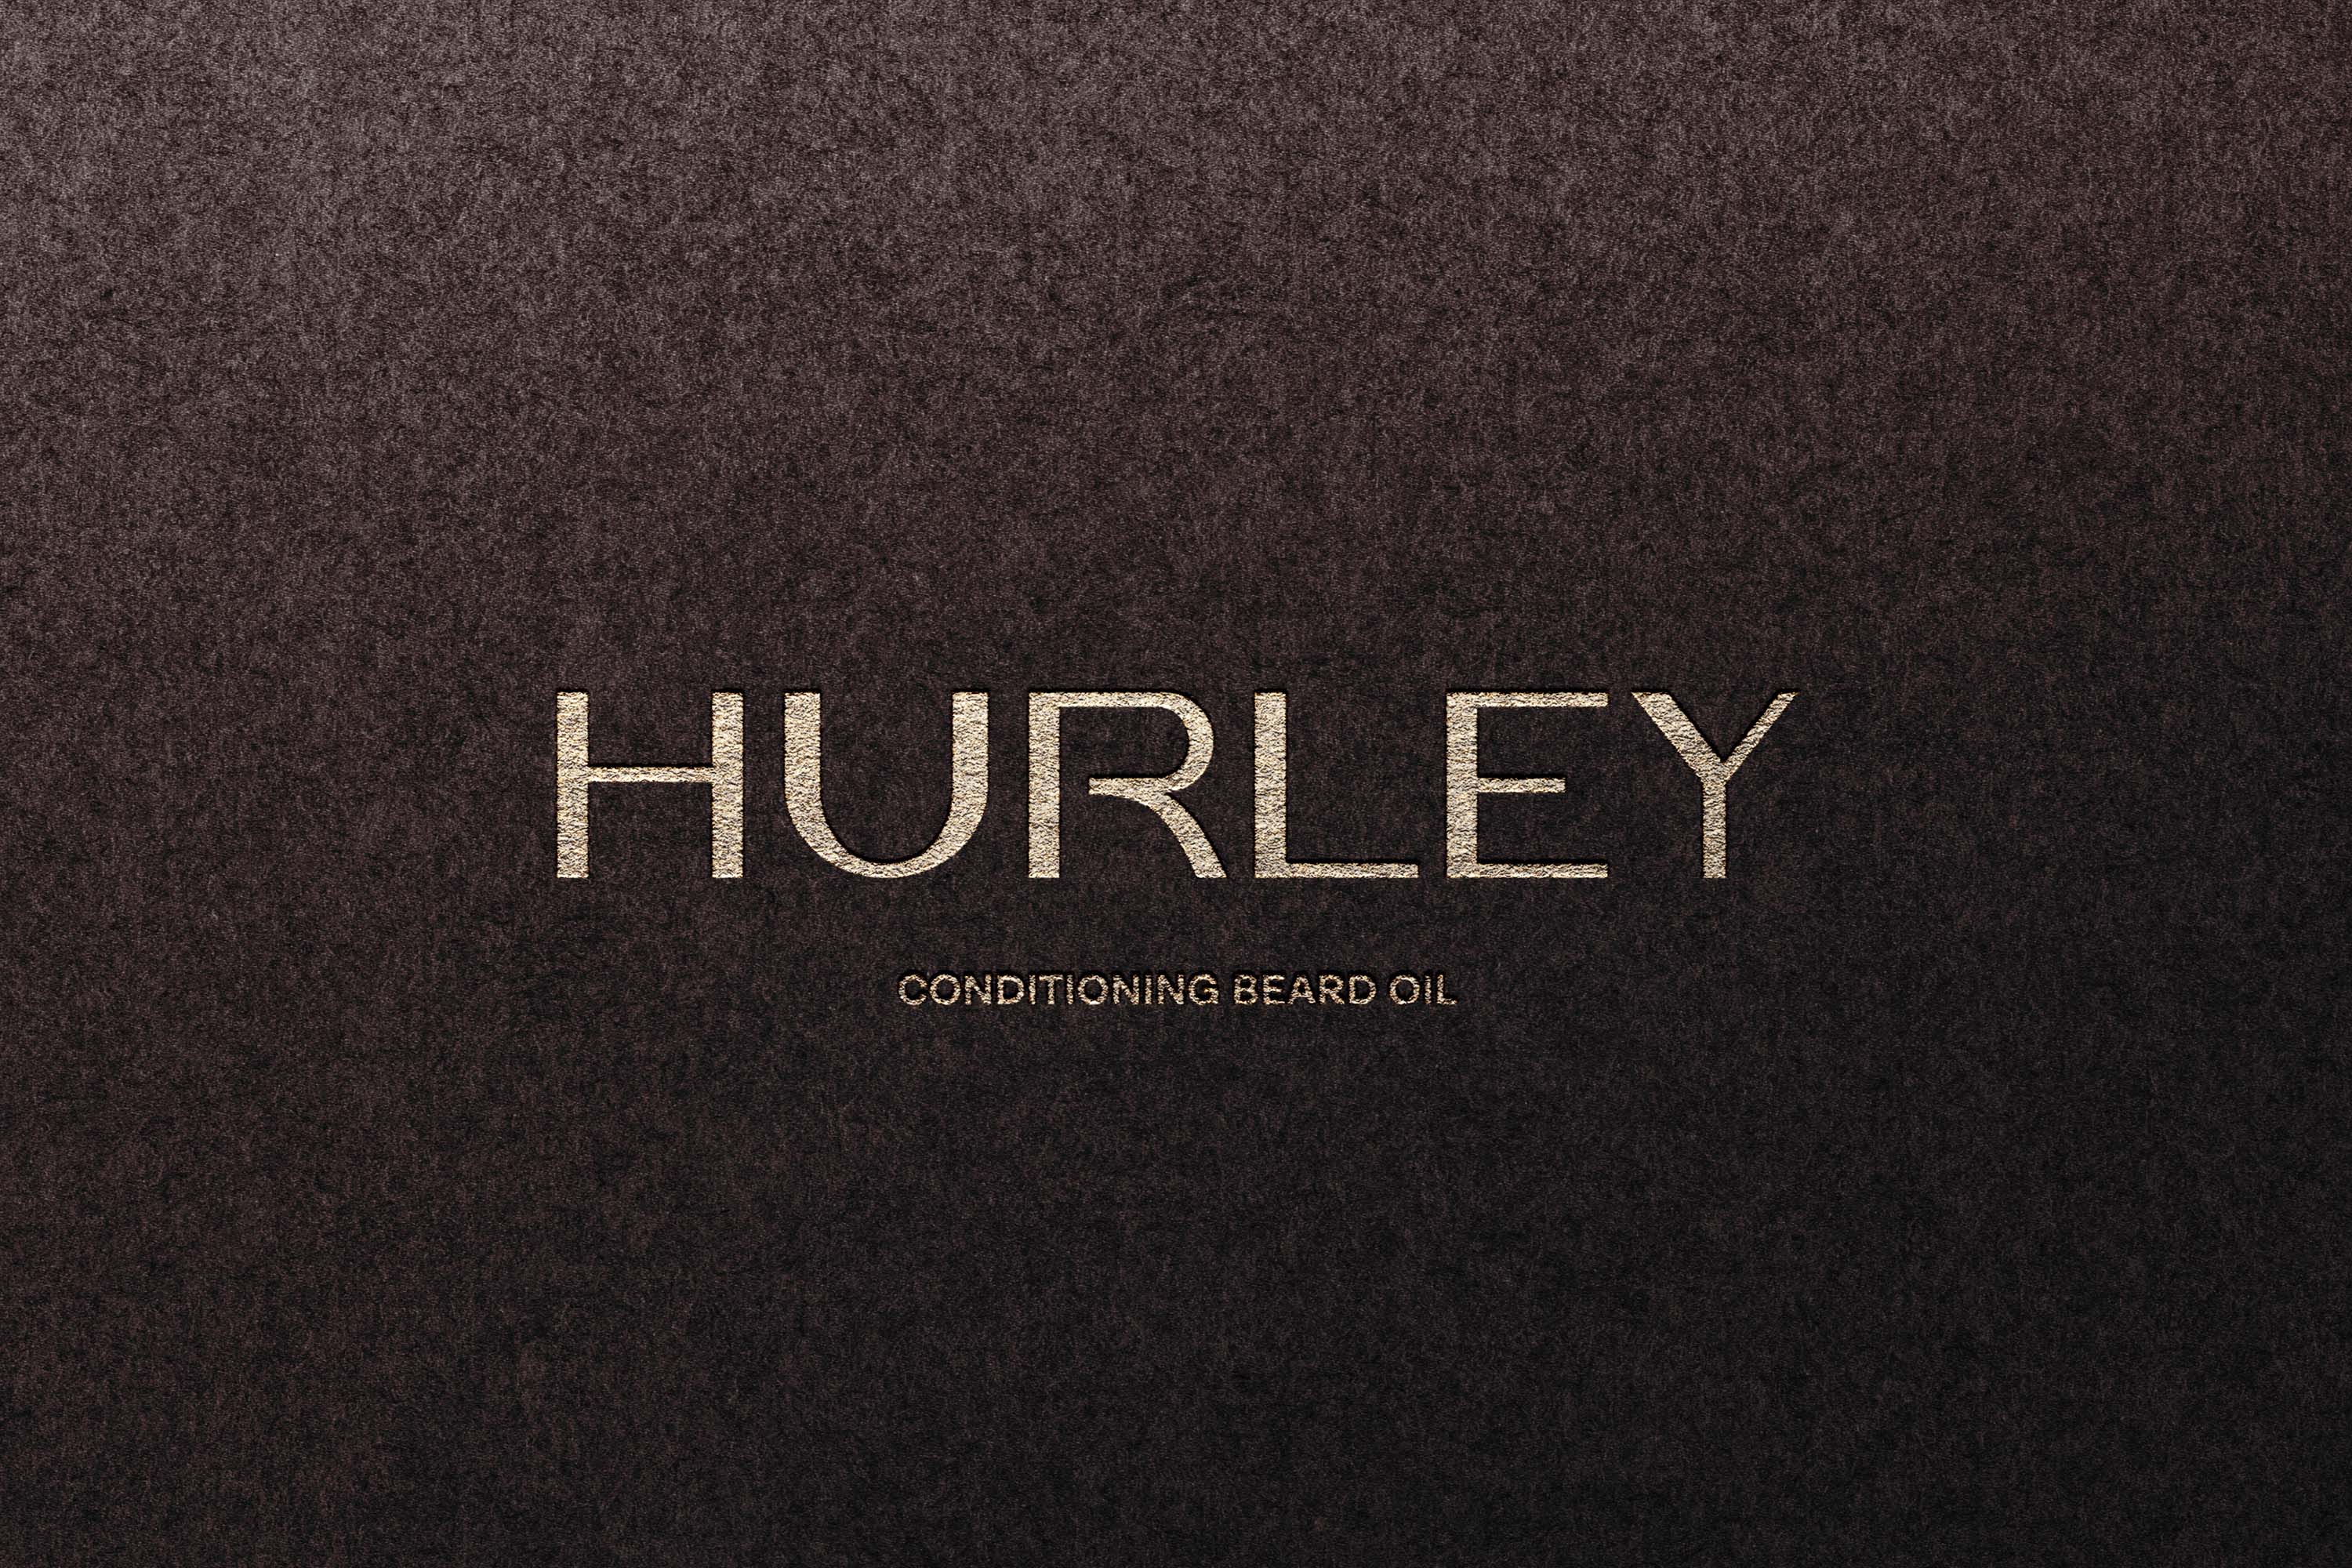 Hurley Beard Oil Brand Identity and Packaging Design by Widarto - World  Brand Design Society